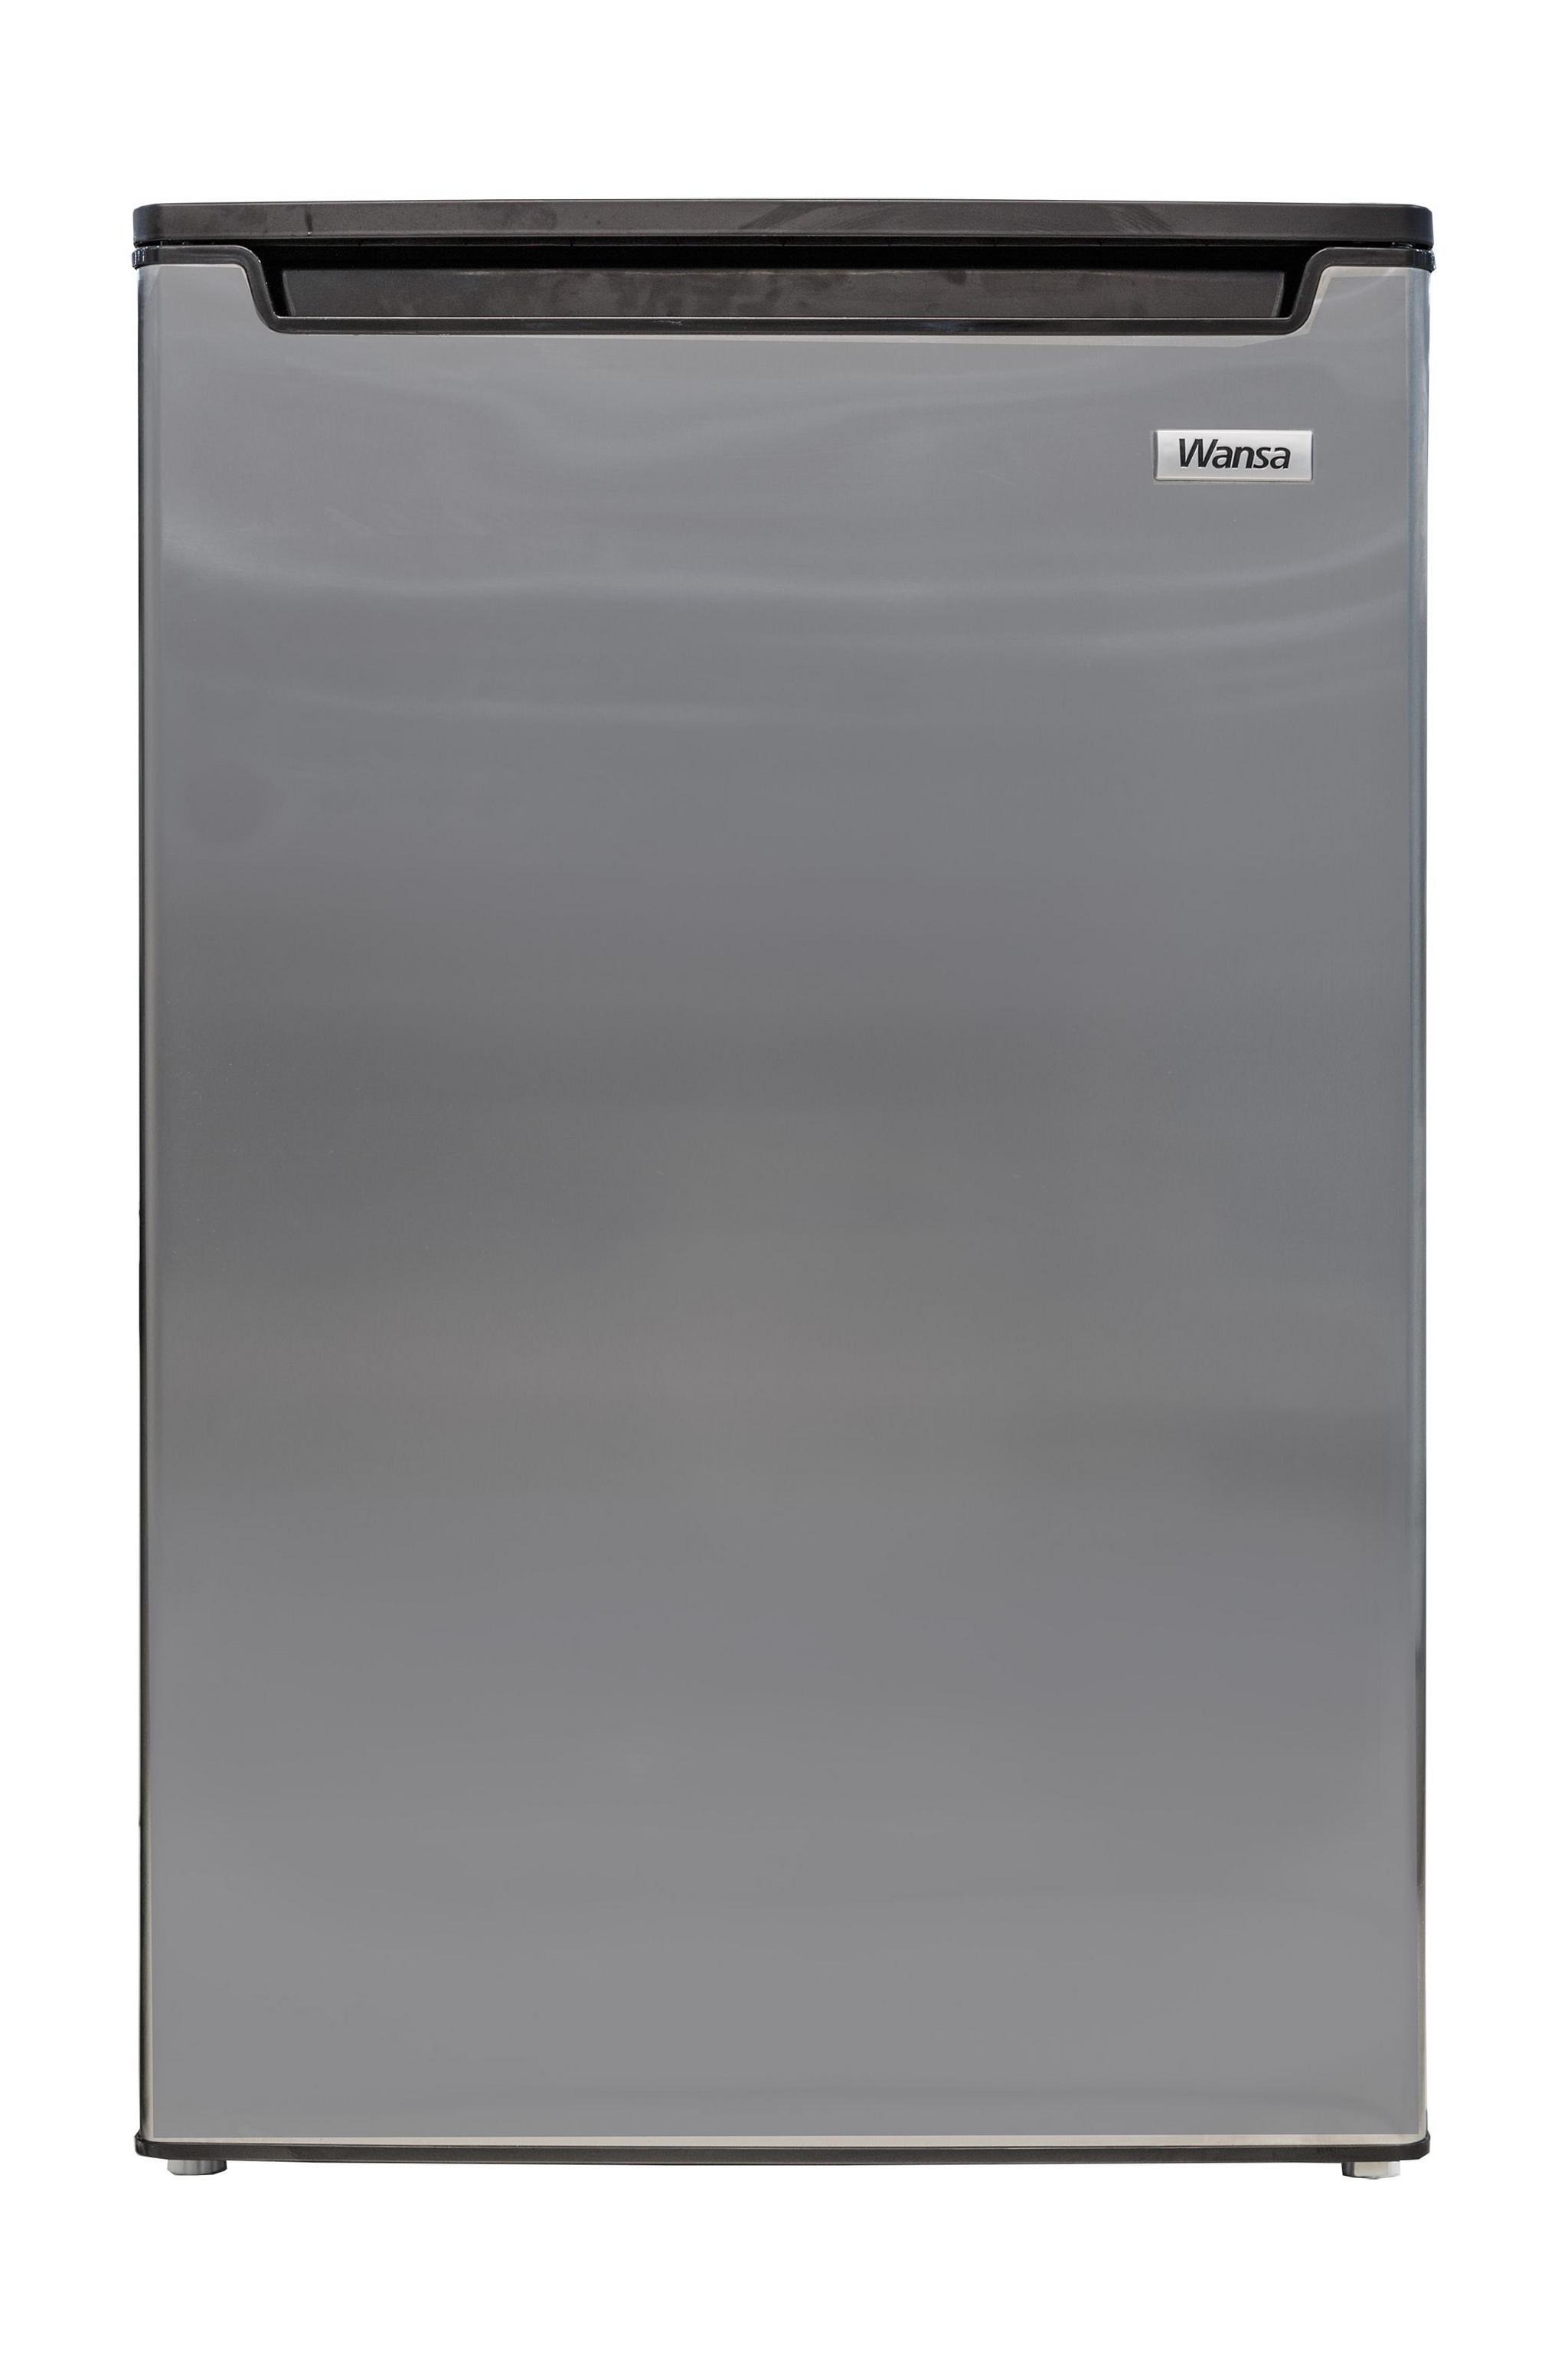 Wansa 3.5 Cft. Upright Freezer – Stainless Steel